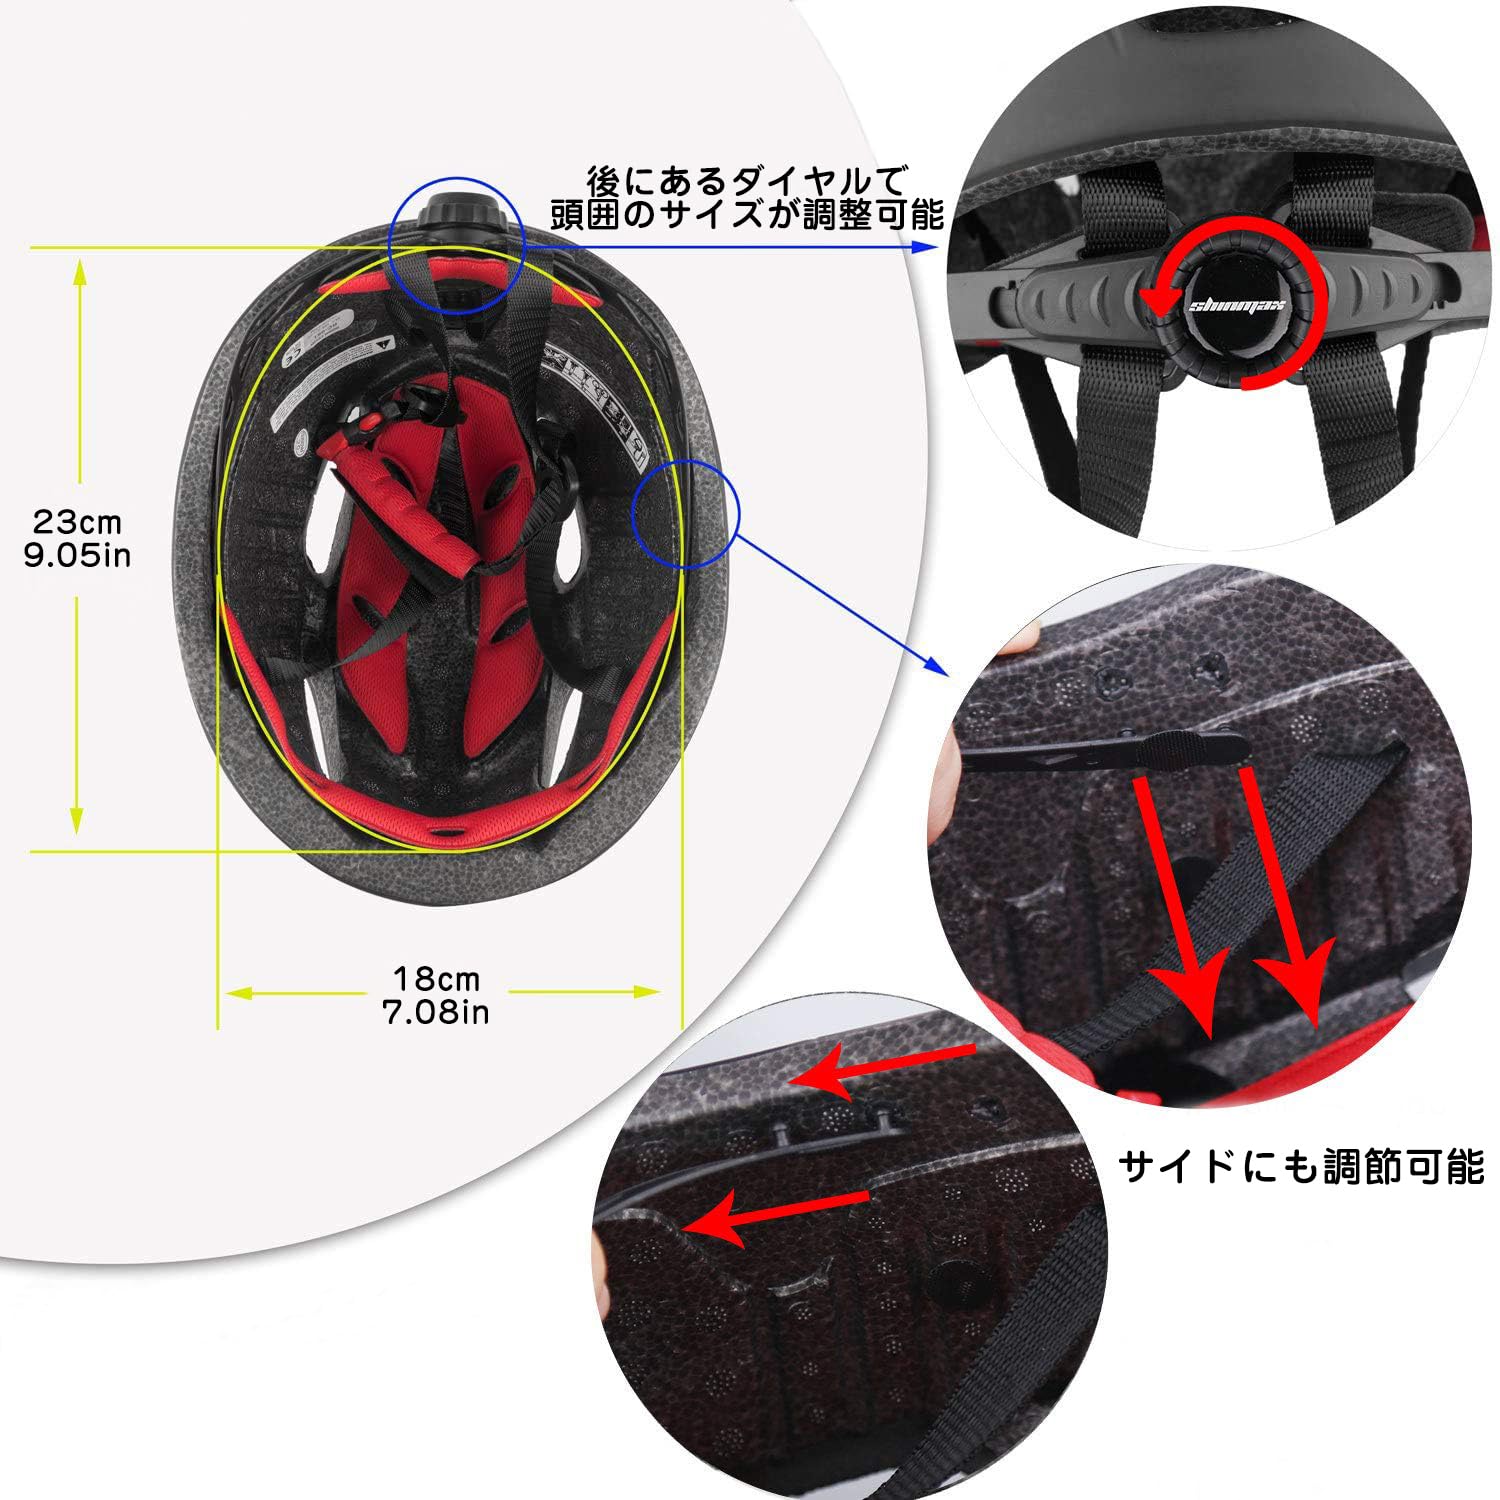 Shinmax 自転車 ヘルメット 大人 ロードバイク ヘルメット CPSC認証済み 通勤 通学 超軽量 高剛性 男性 女性 小五以上適 通気 磁気ゴーグル サイズ調整可能 56-61cm M/L 収納用袋付き 001式自転車ヘルメット (チタン・ブラック)